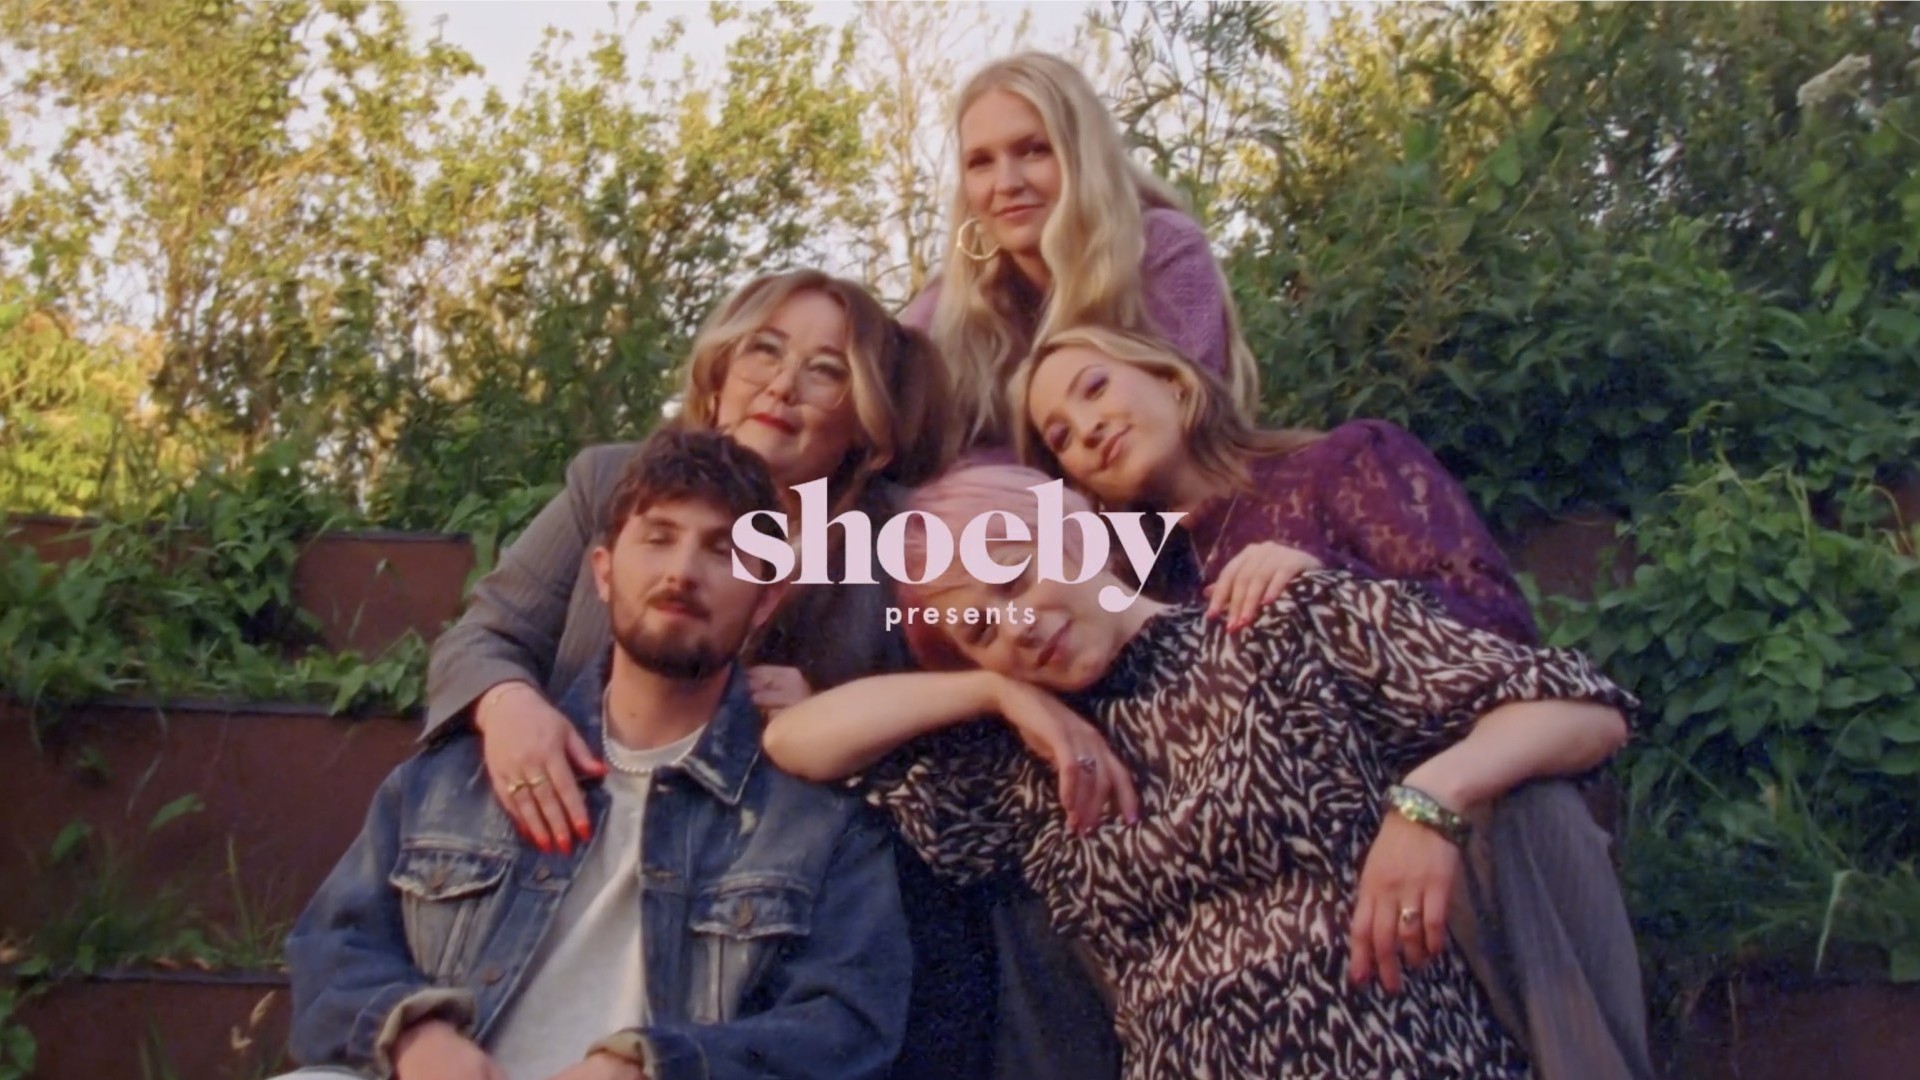 Shoeby campaign by Julia Falkner